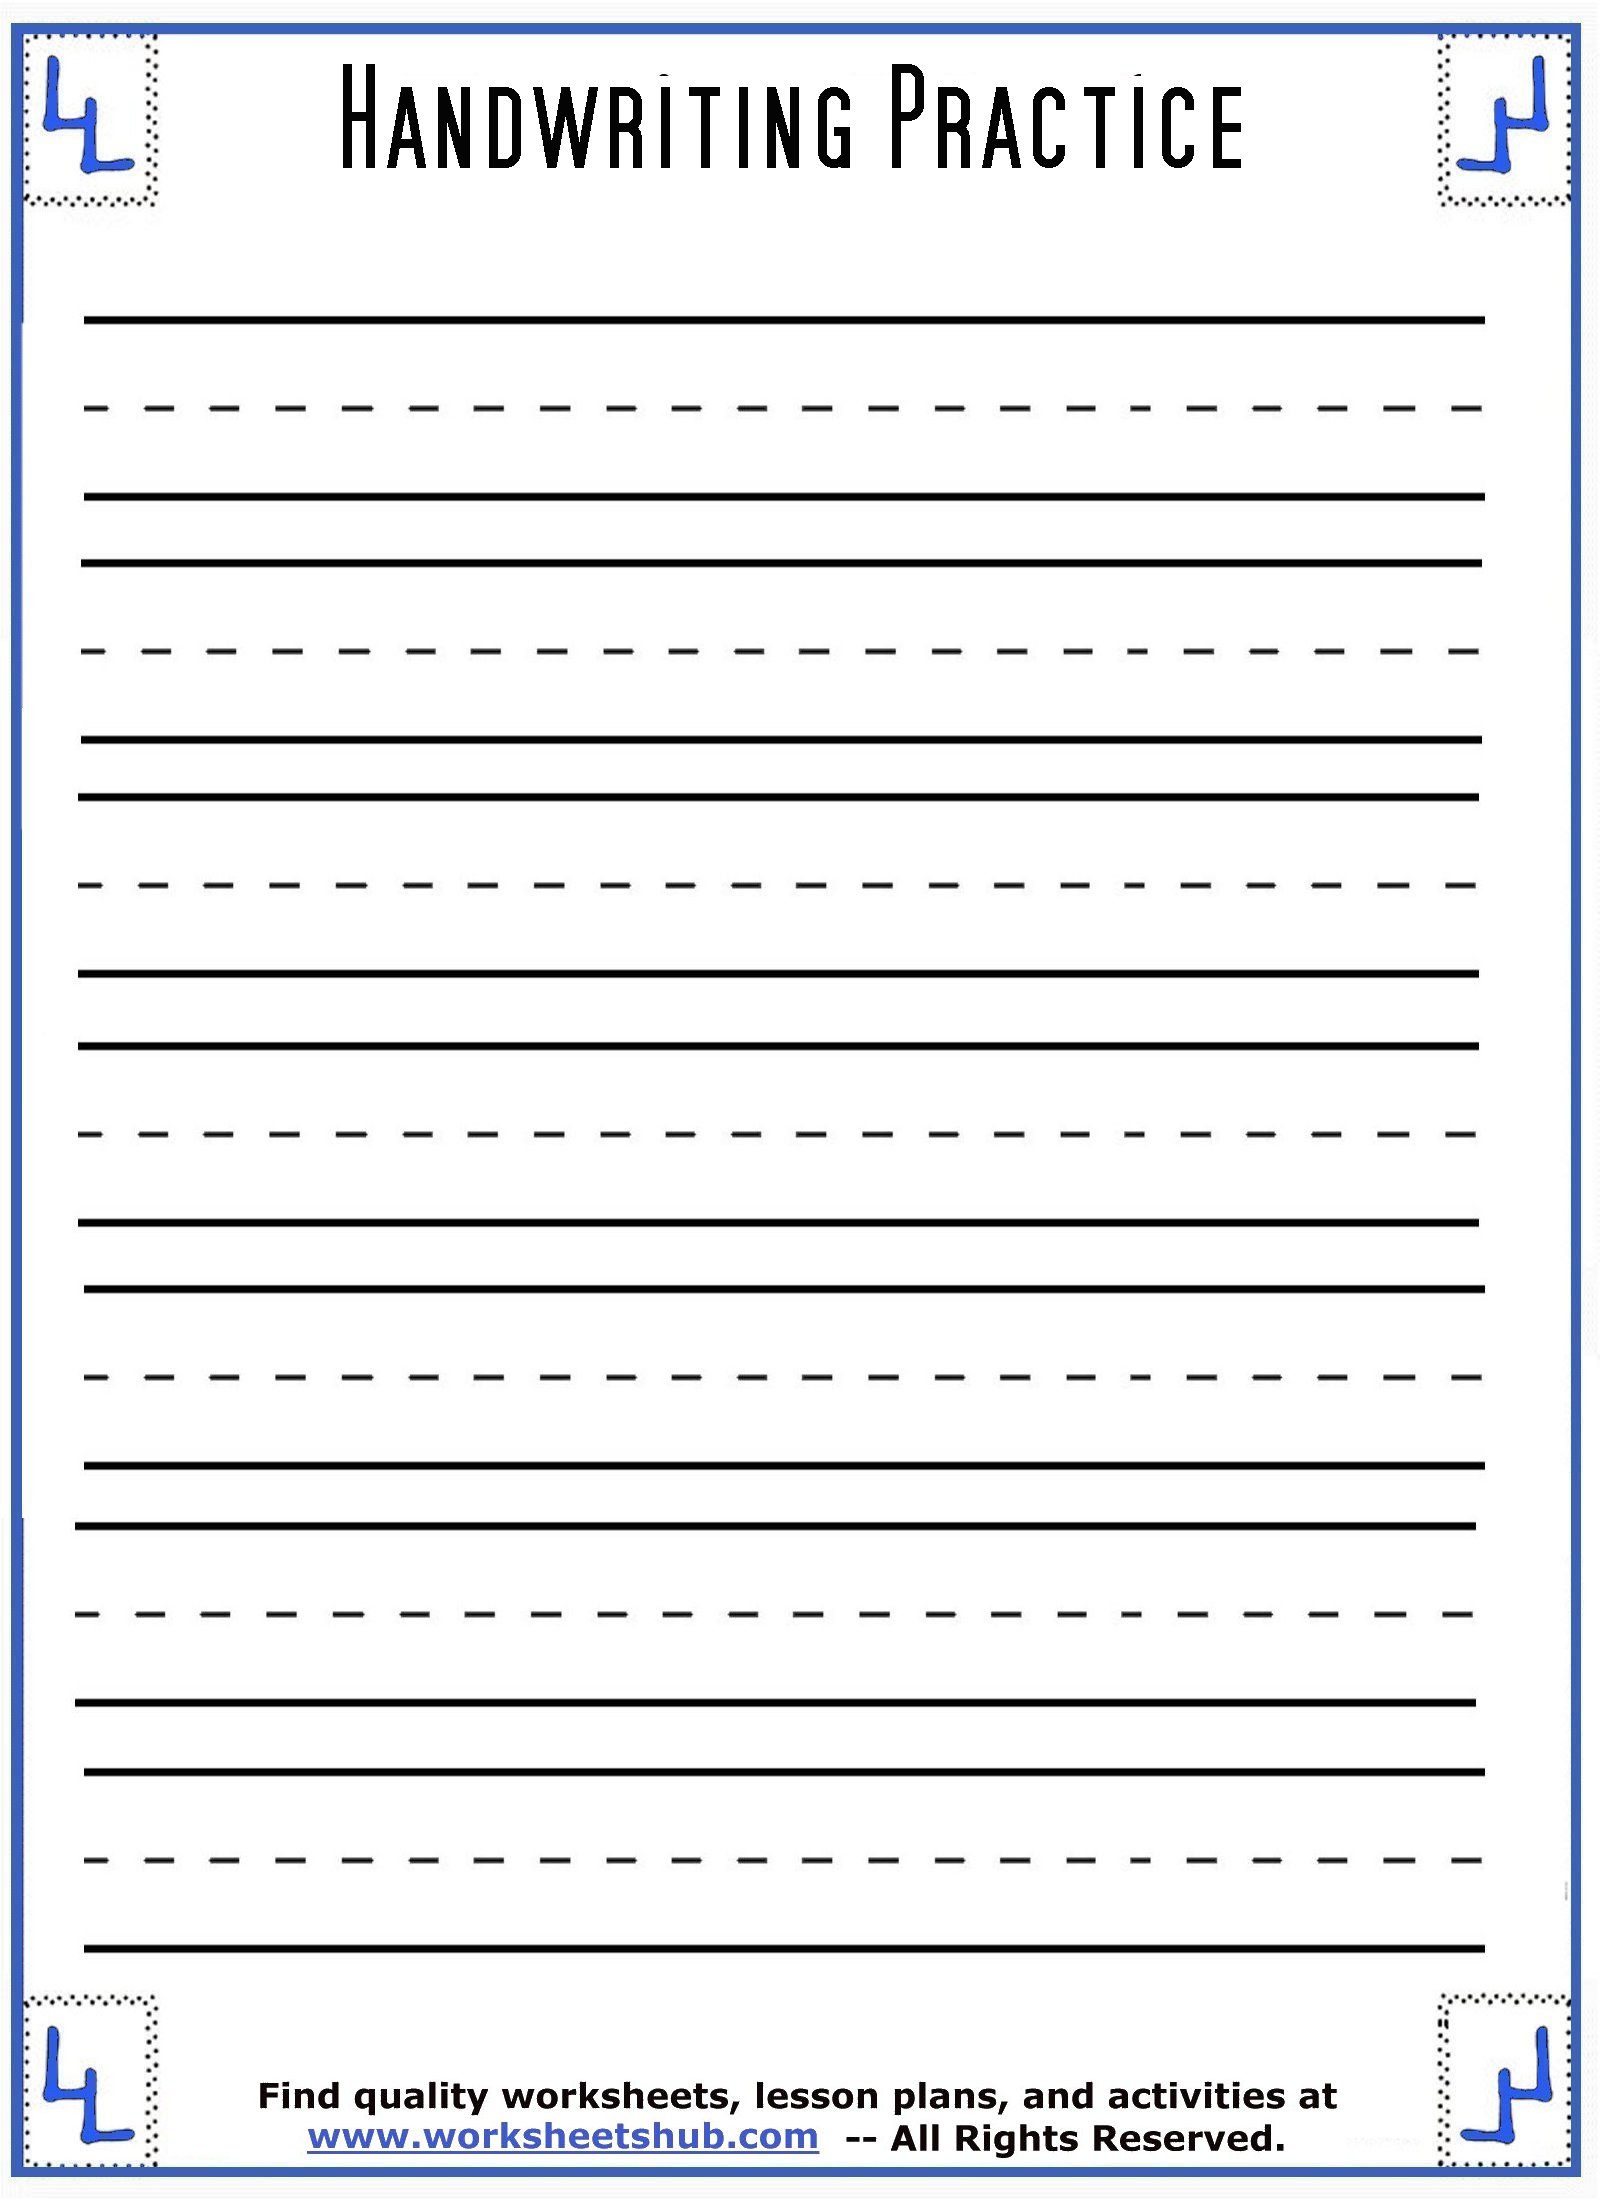 printable-handwriting-practice-sheets-free-free-printable-templates